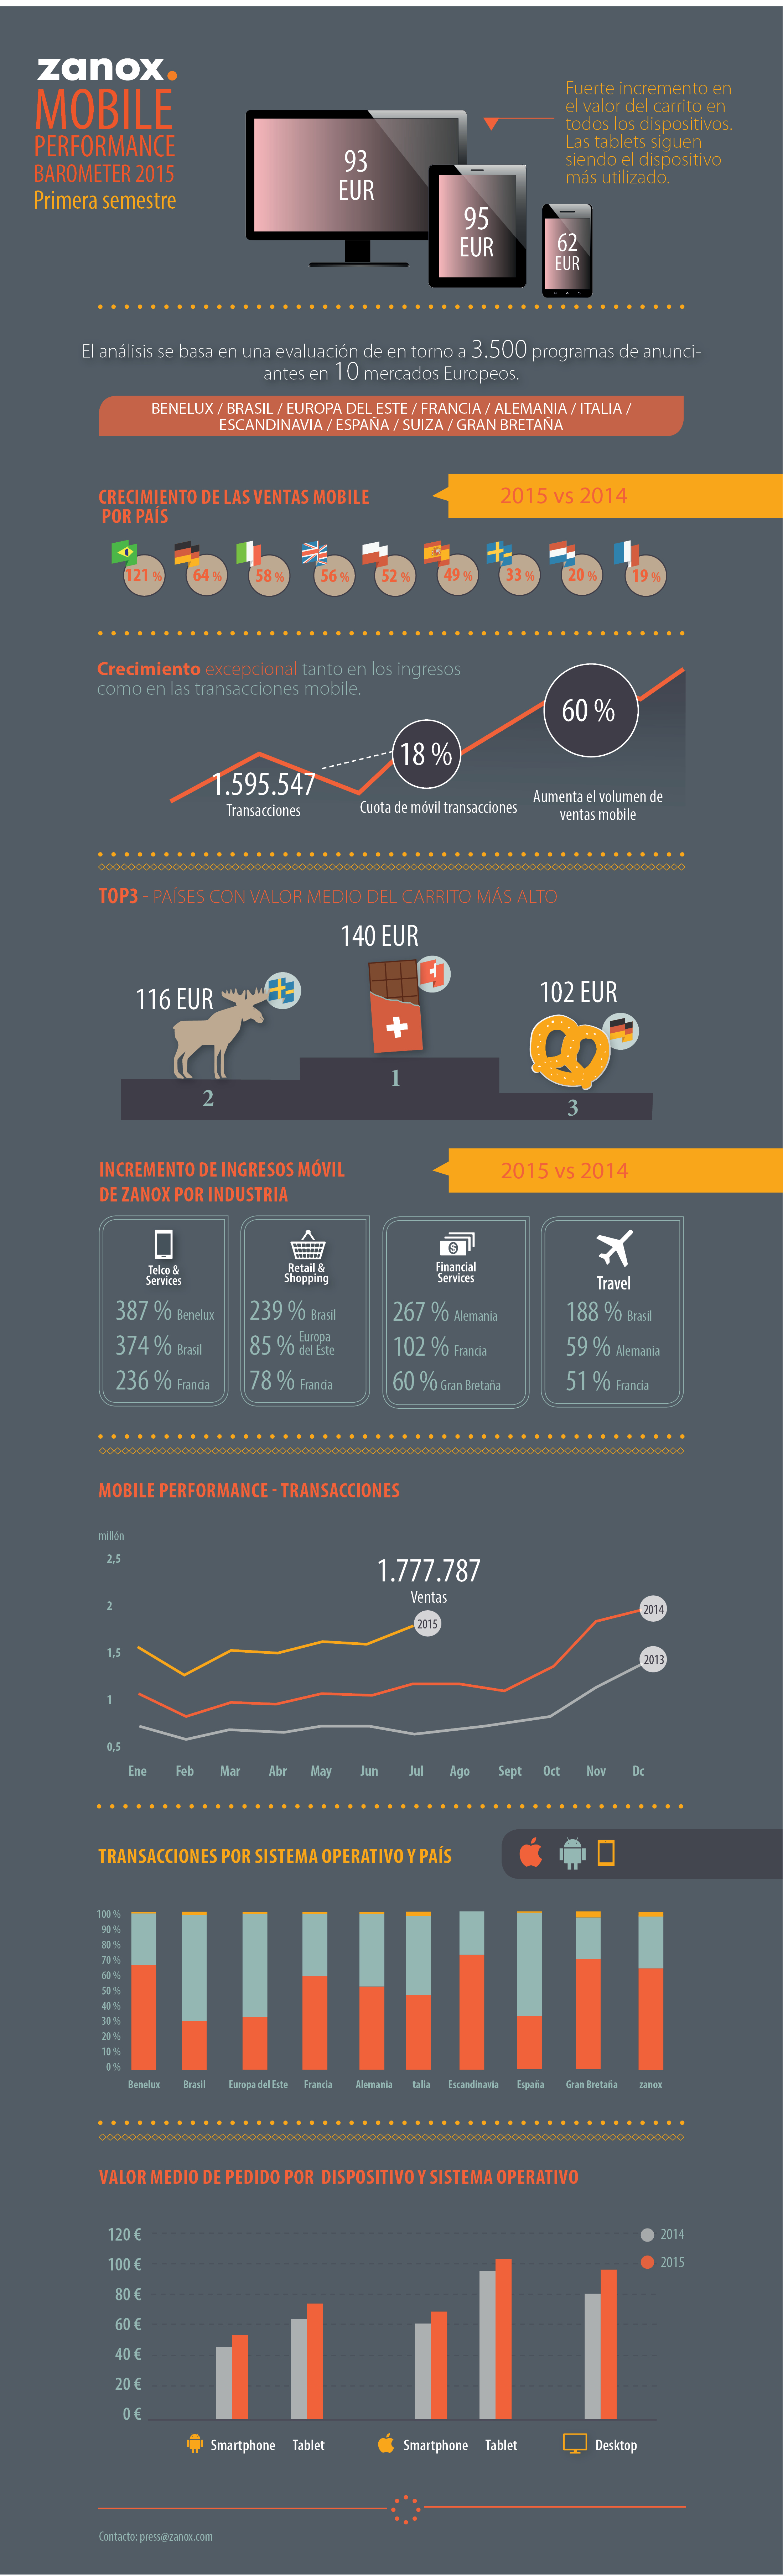 infografia-mobile-performance-barometer-2015-1-semestre-zanox-acens-blog-cloud